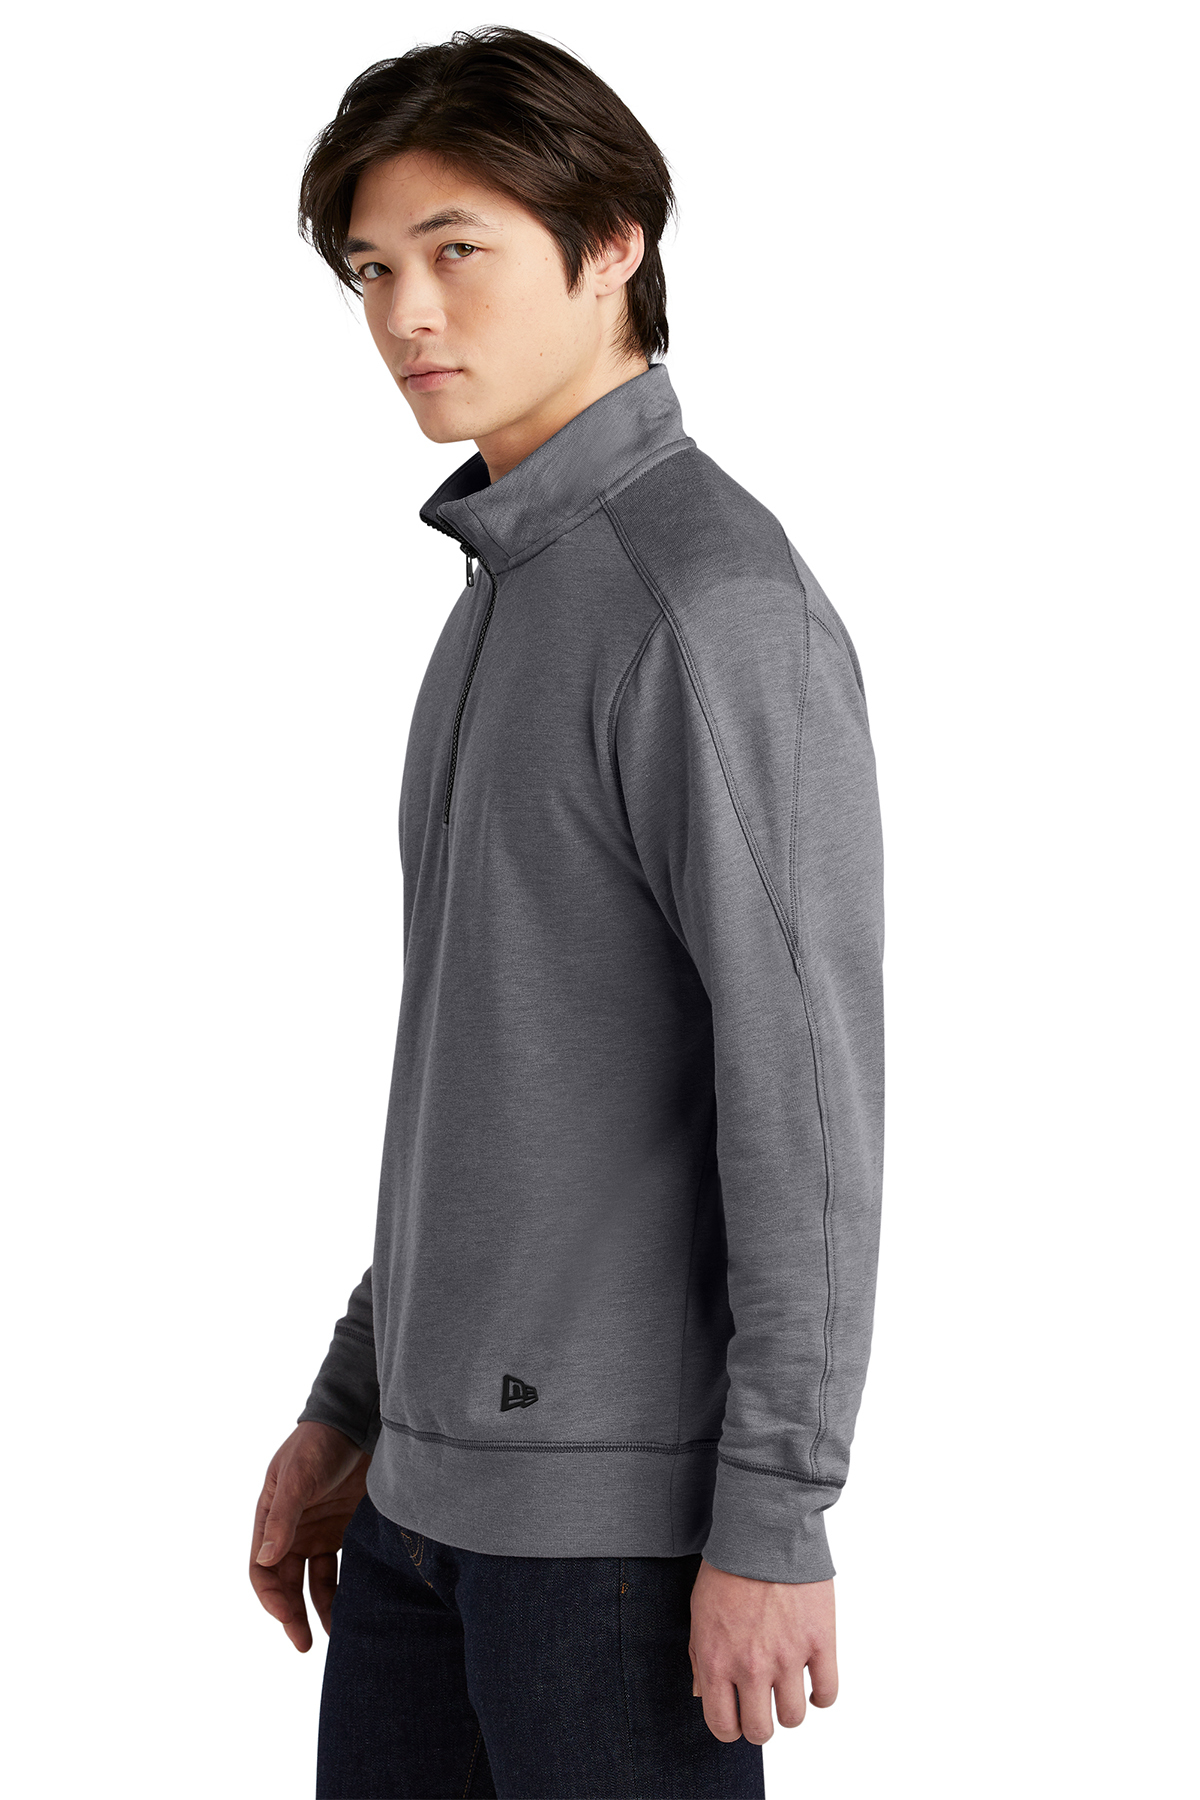 New Era Tri-Blend Fleece 1/4-Zip Pullover | Product | SanMar